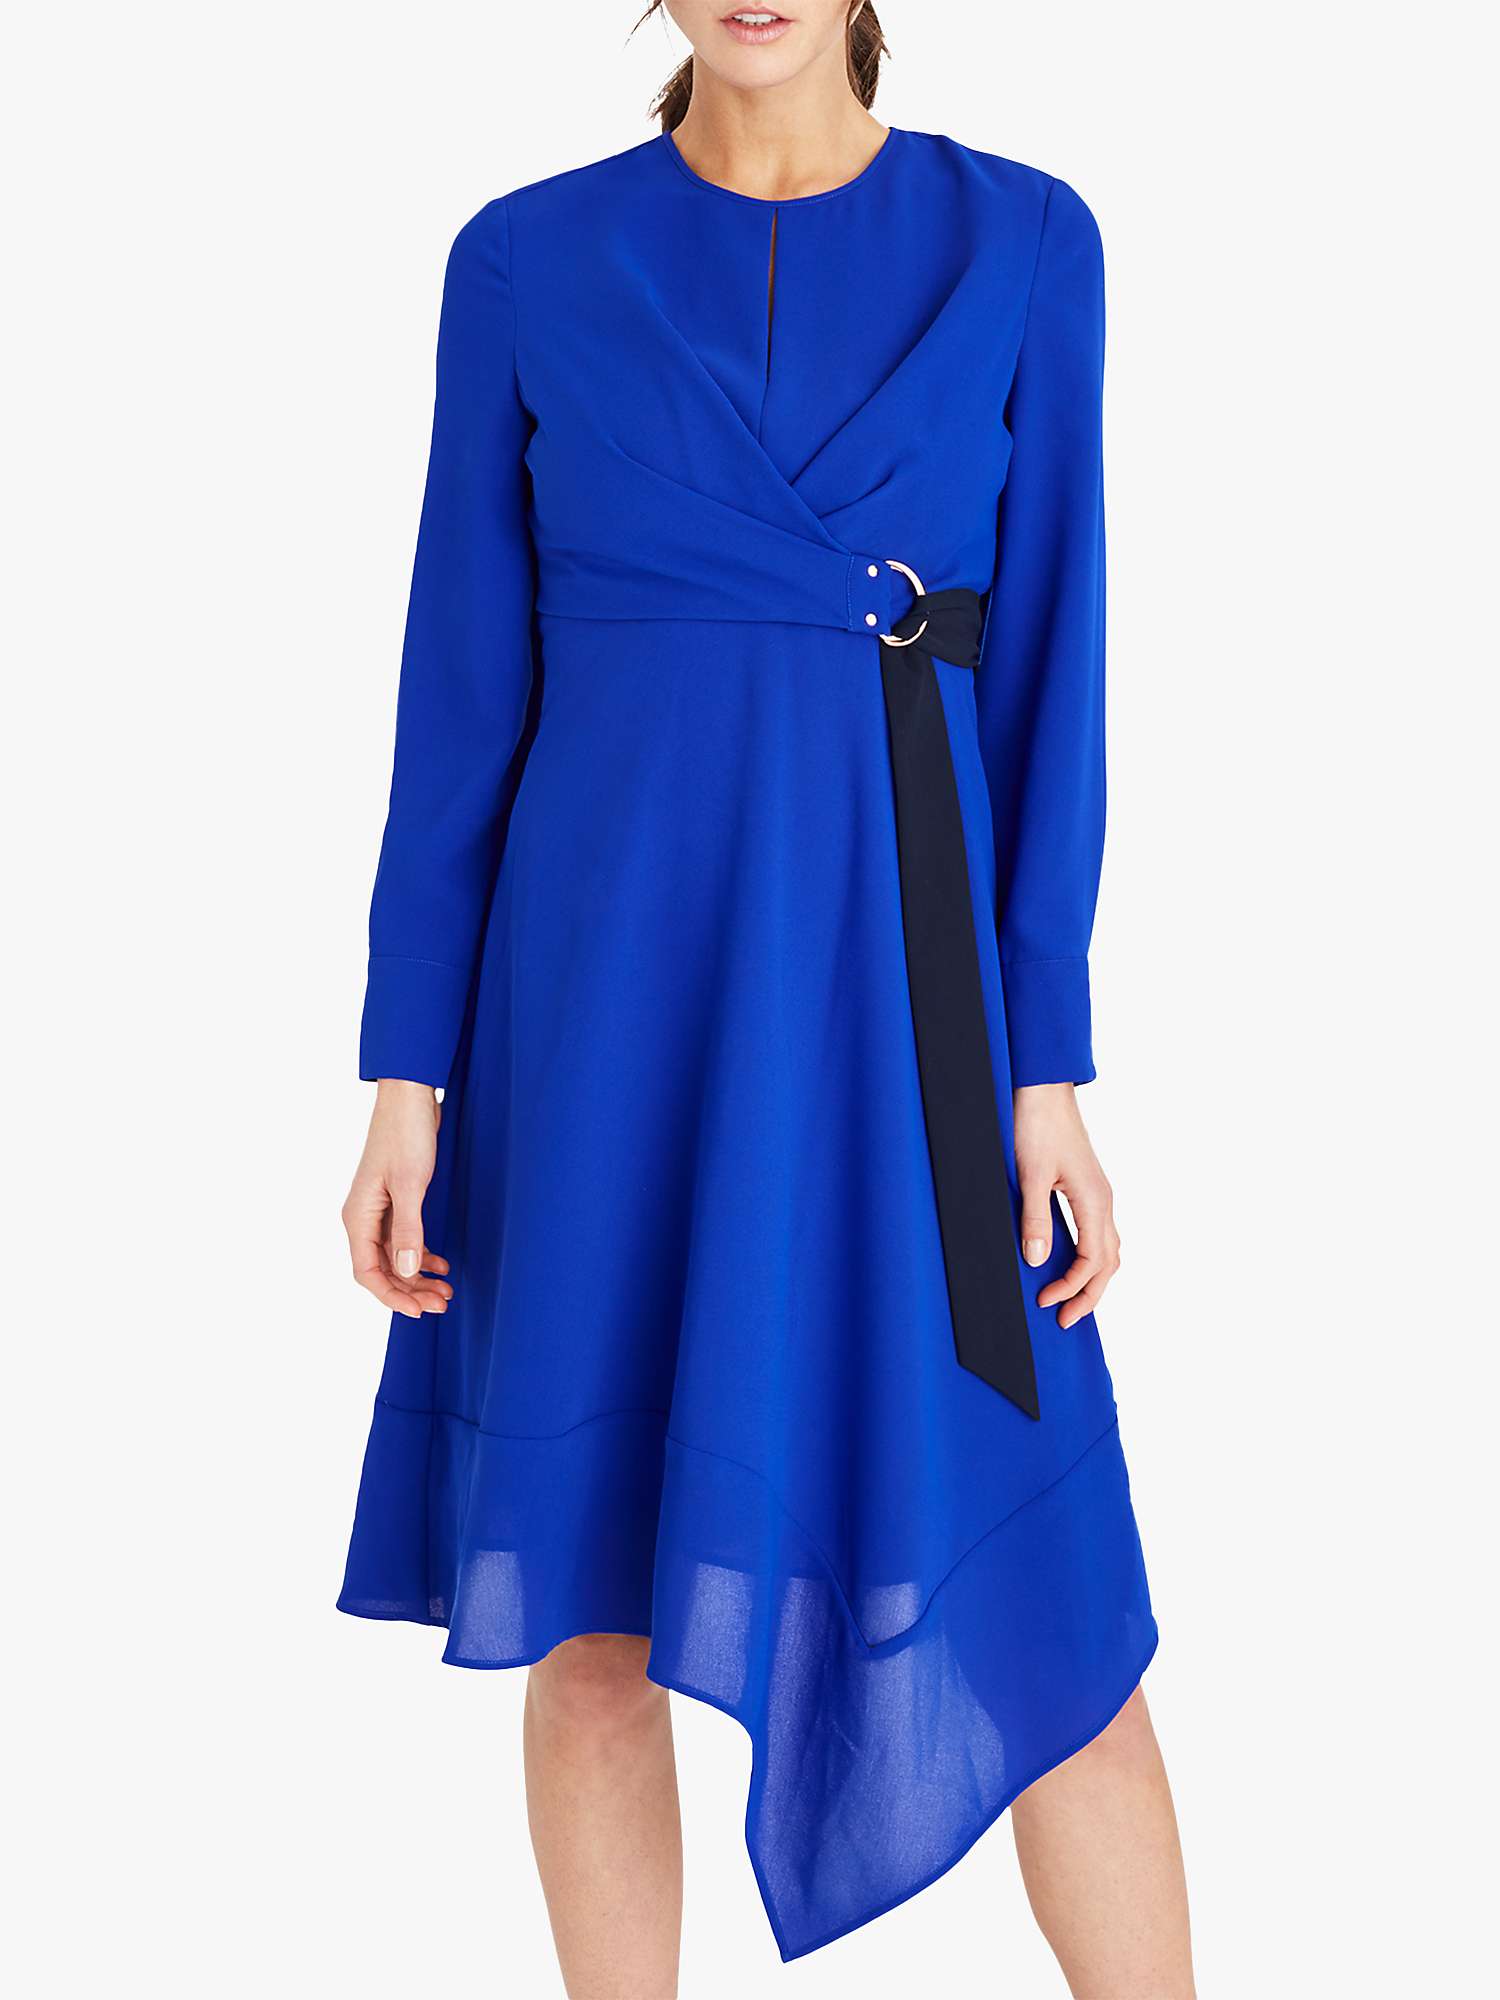 Damsel in a Dress Eria Wrap Dress, Blue at John Lewis \u0026 Partners